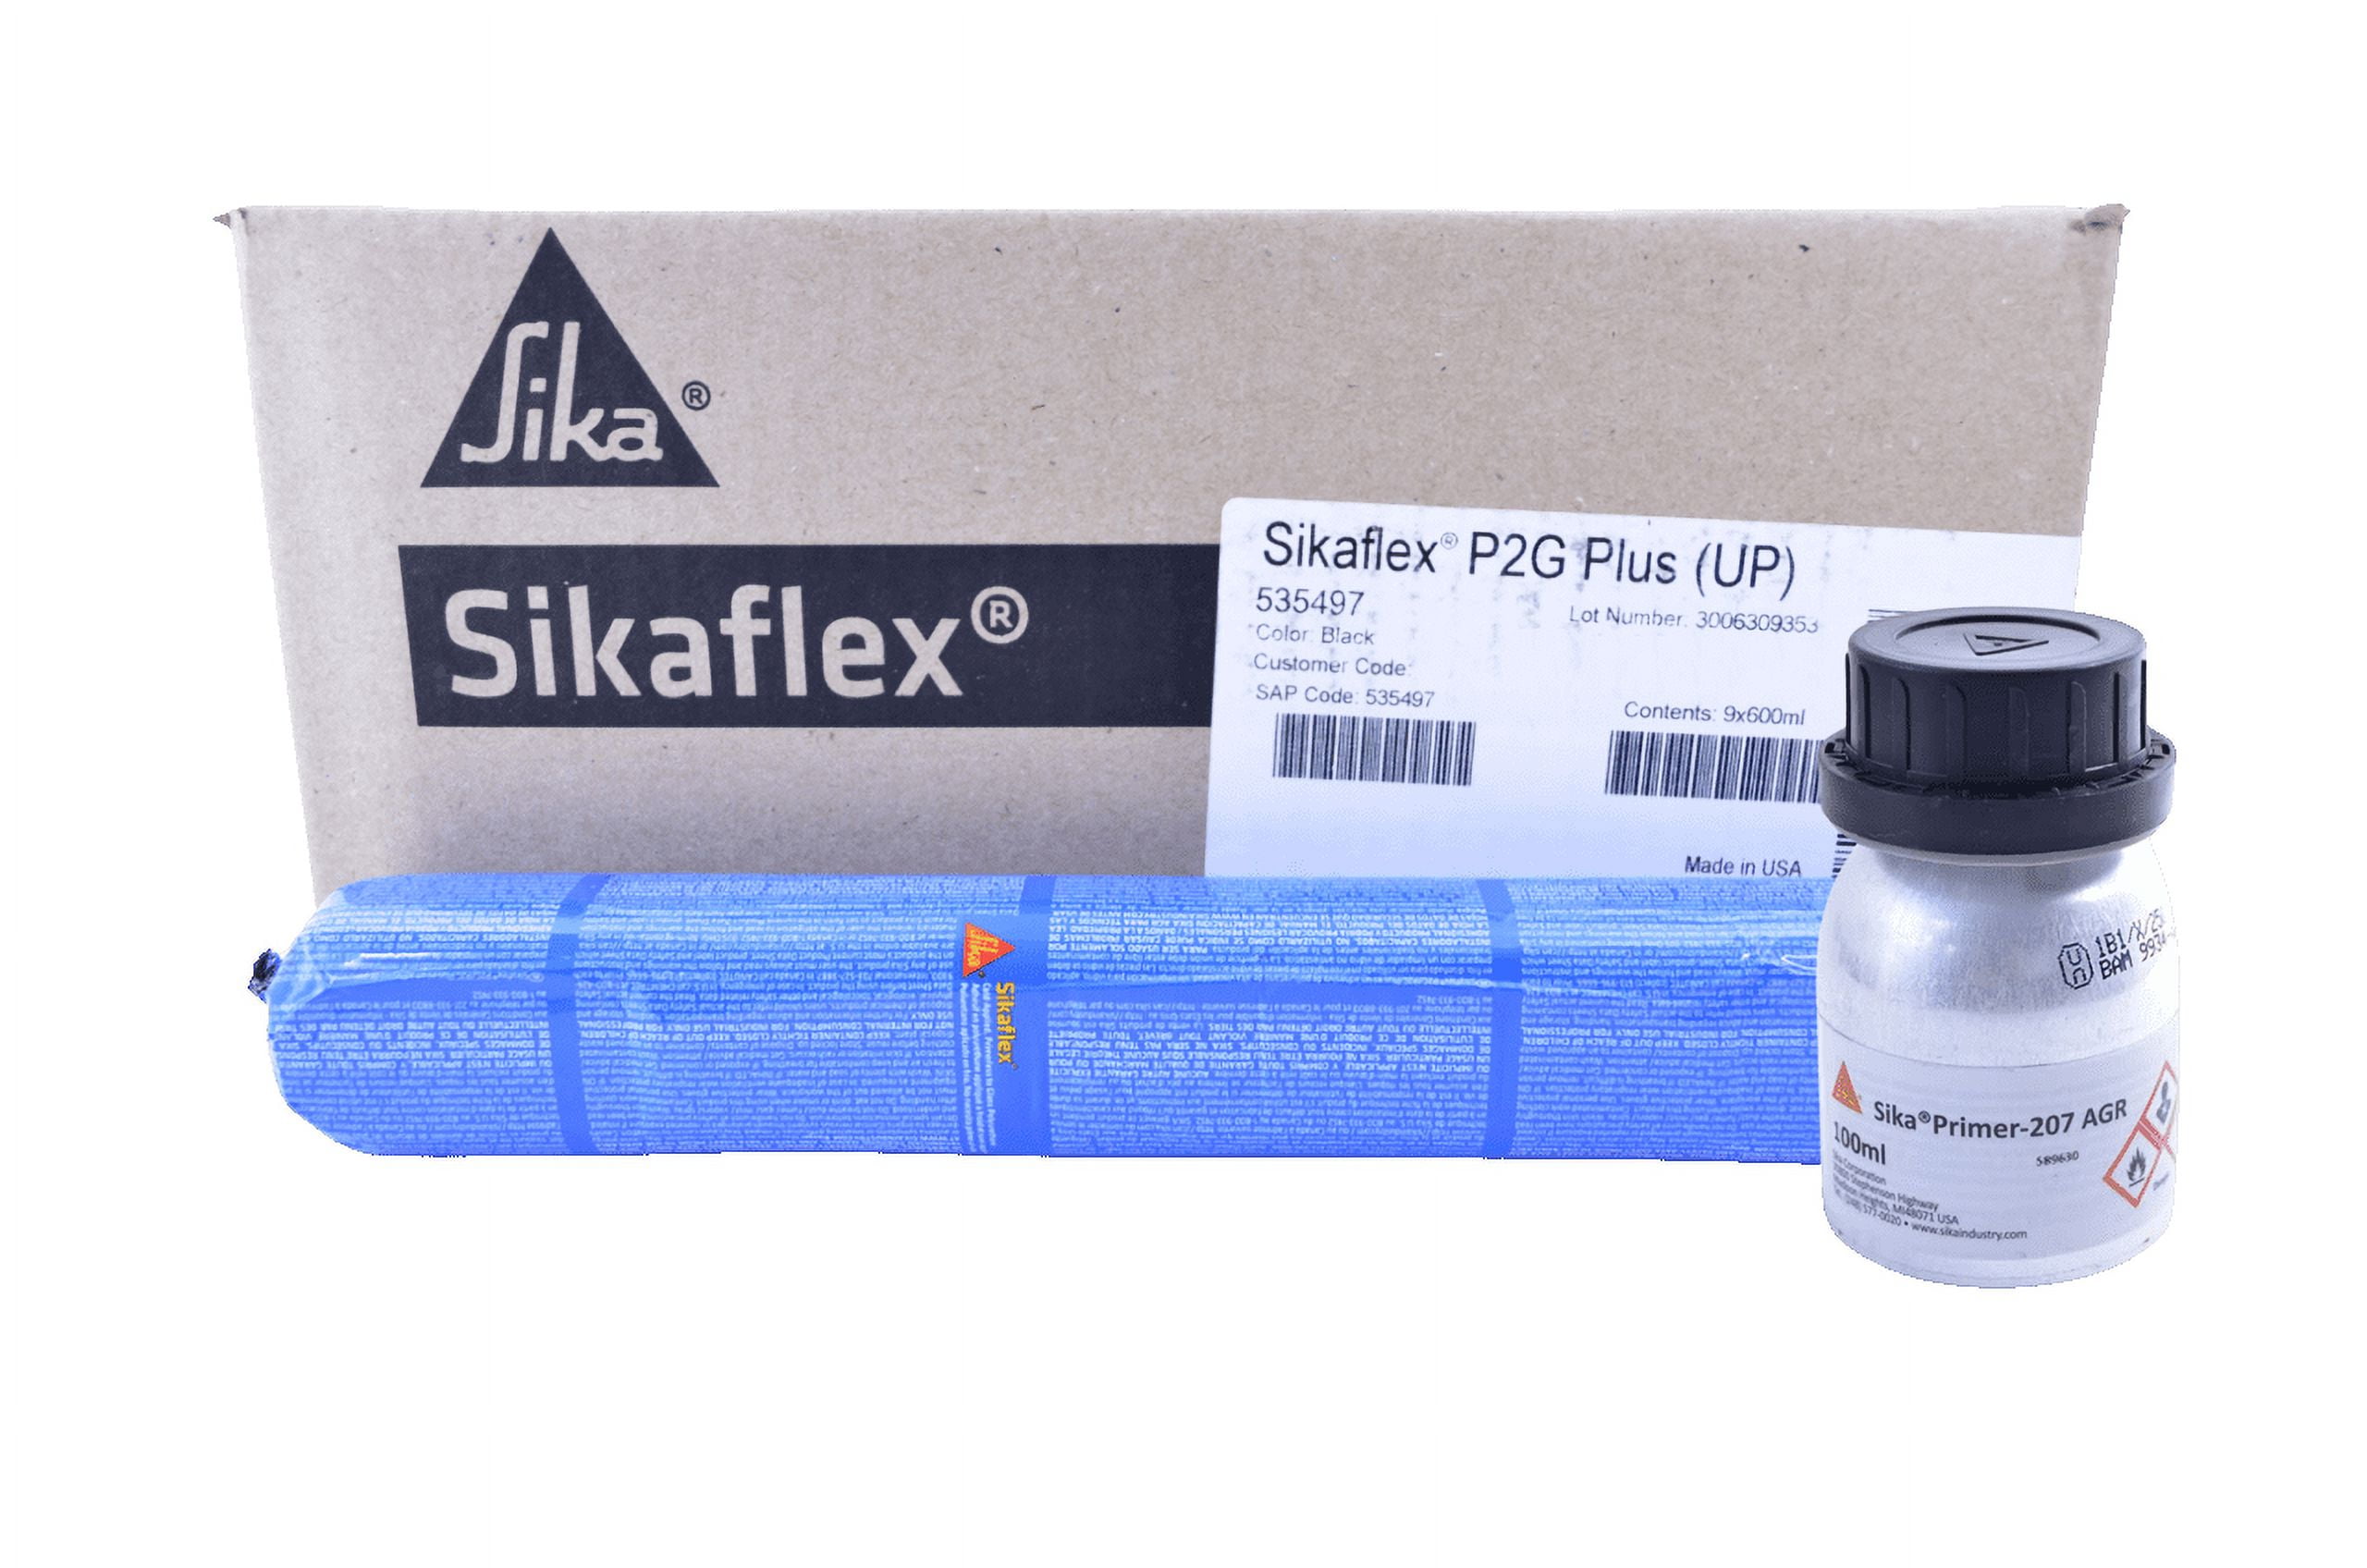 4 X Windshield Urethane Adhesive Primerless Auto Glass Sealant Sikaflex P2g